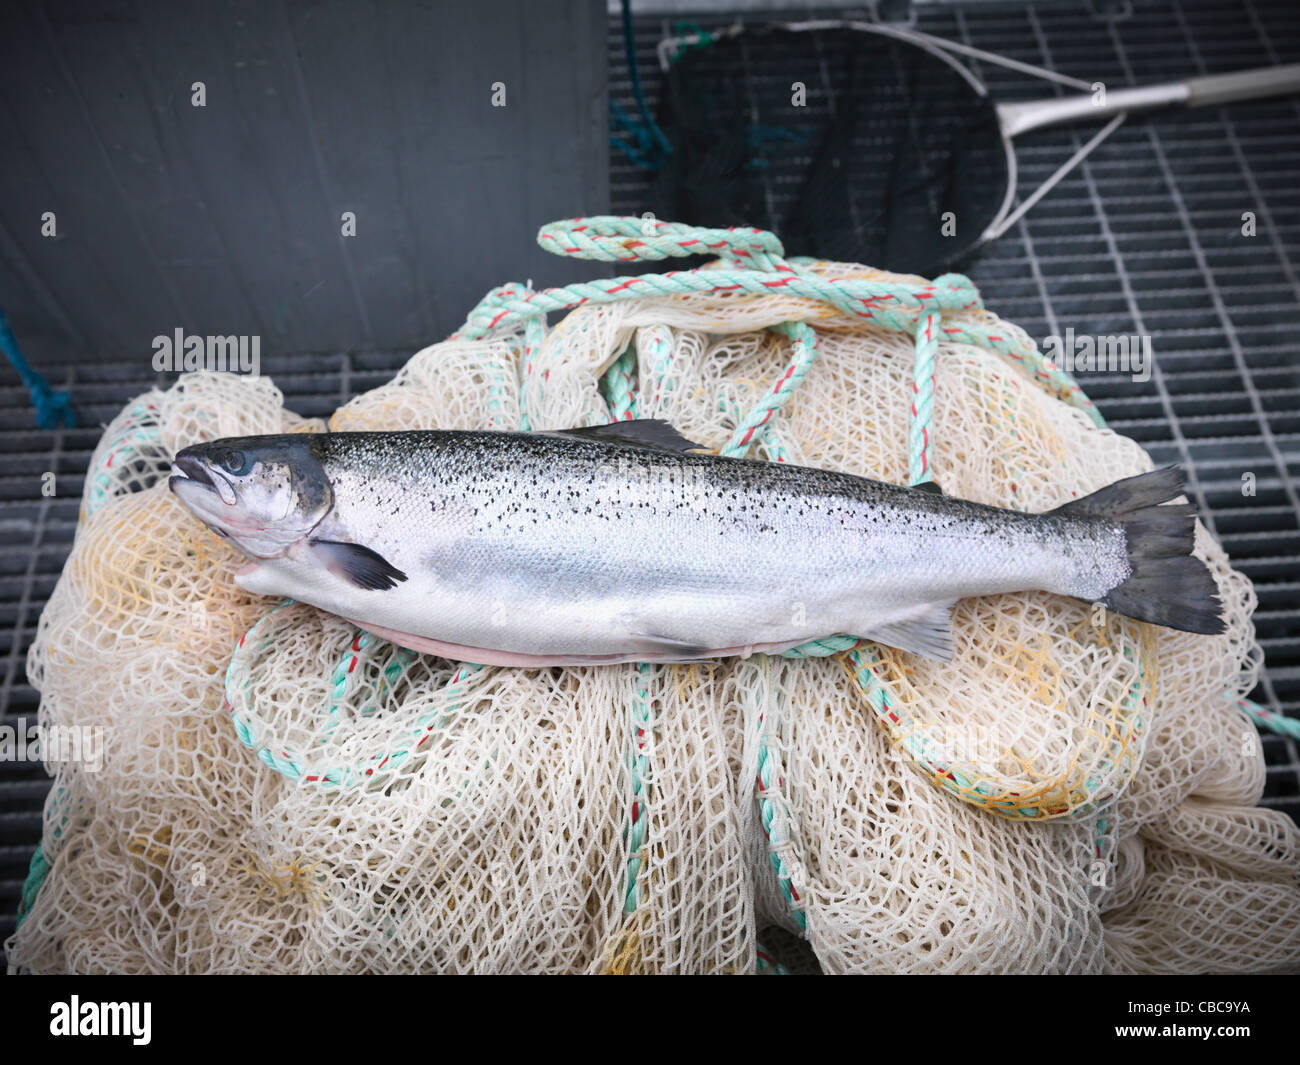 Freshly caught fish on net Stock Photo